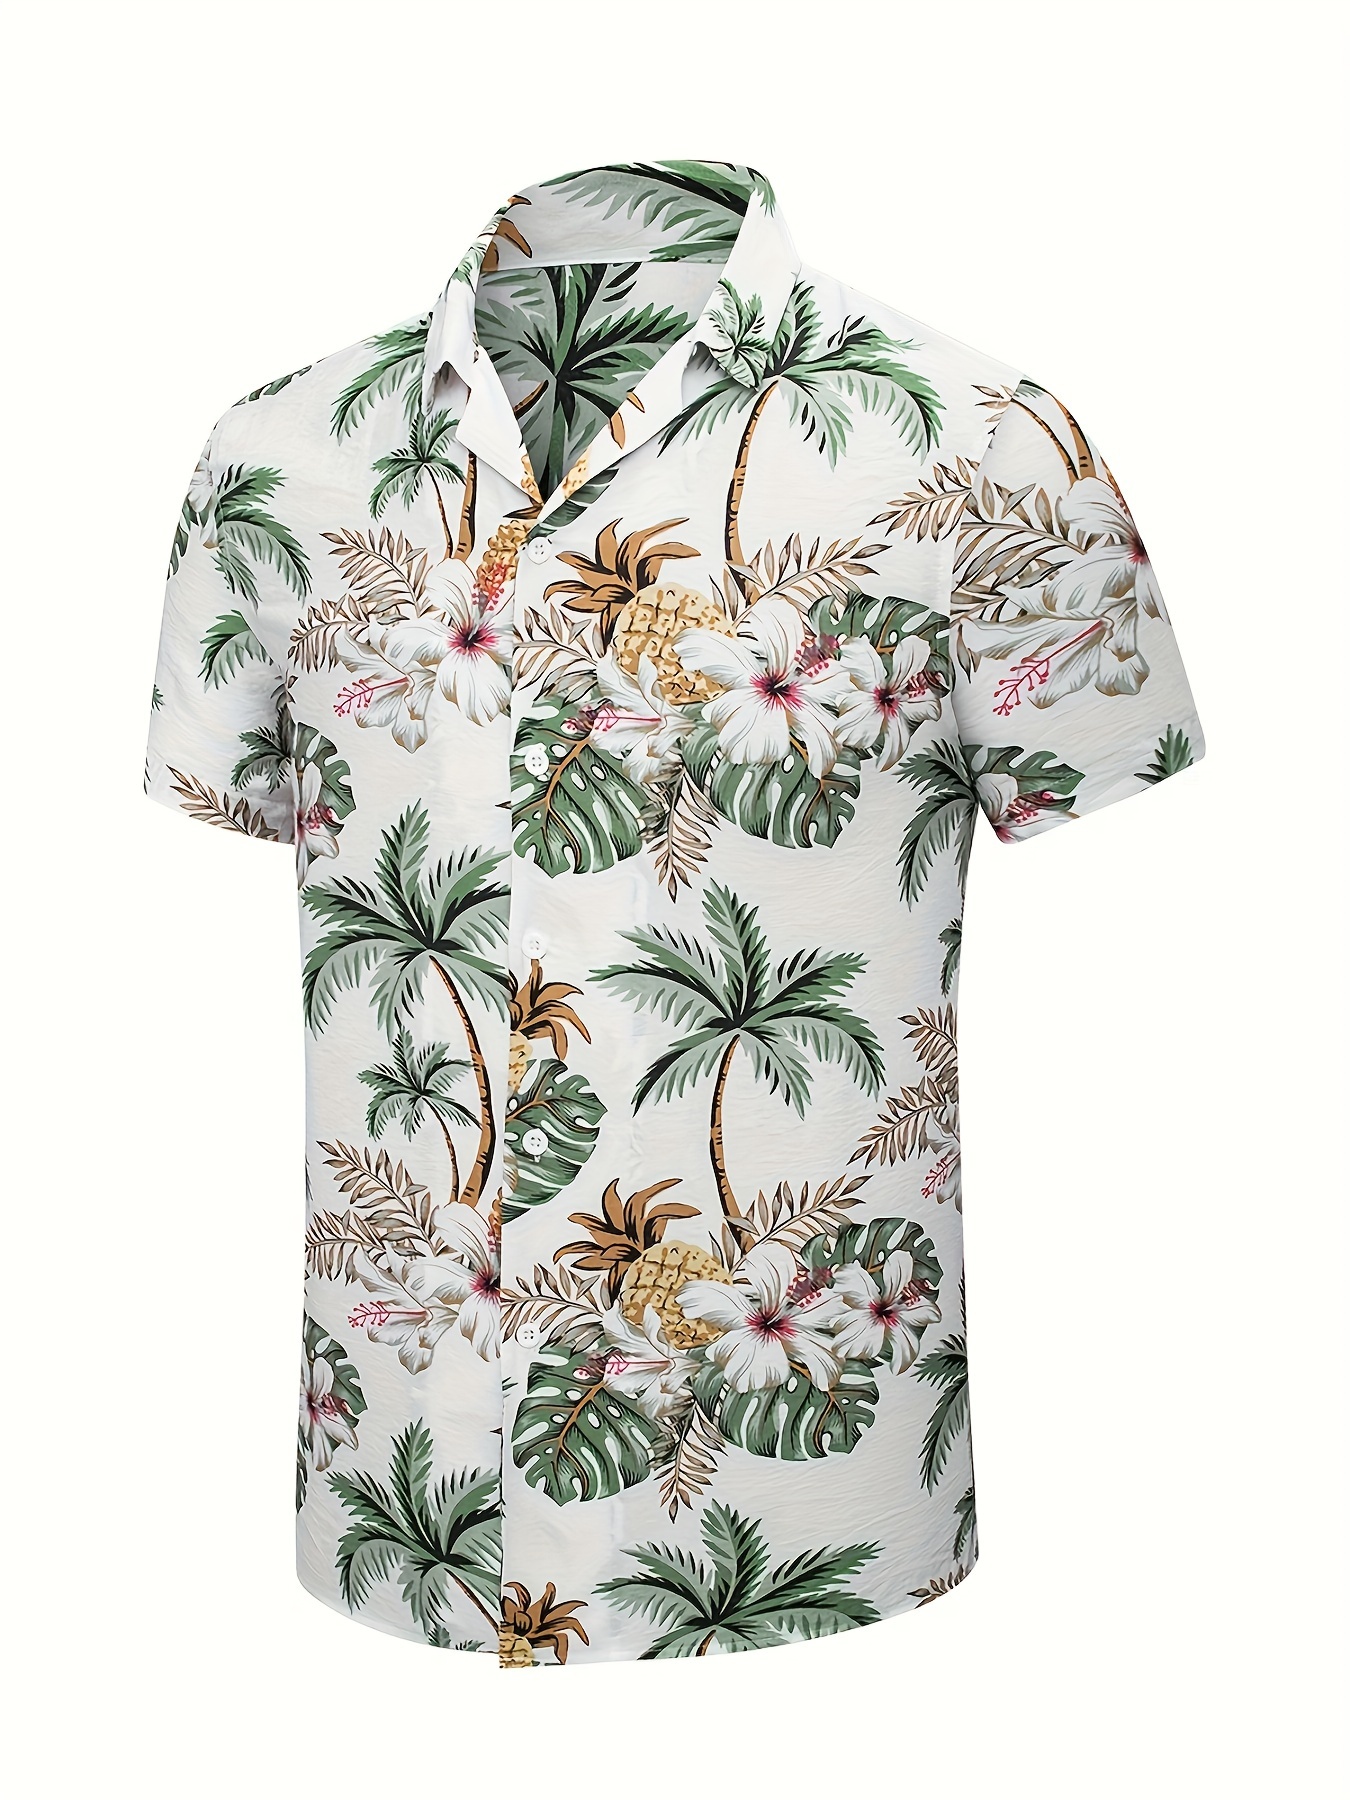 Cubinest Men's Short-Sleeved Sports Shirt Hawaiian Shirt Black Shirts White  Beach Shirt Summer Shirt Fishing Shirt Short Sleeve Men Checked Hippie